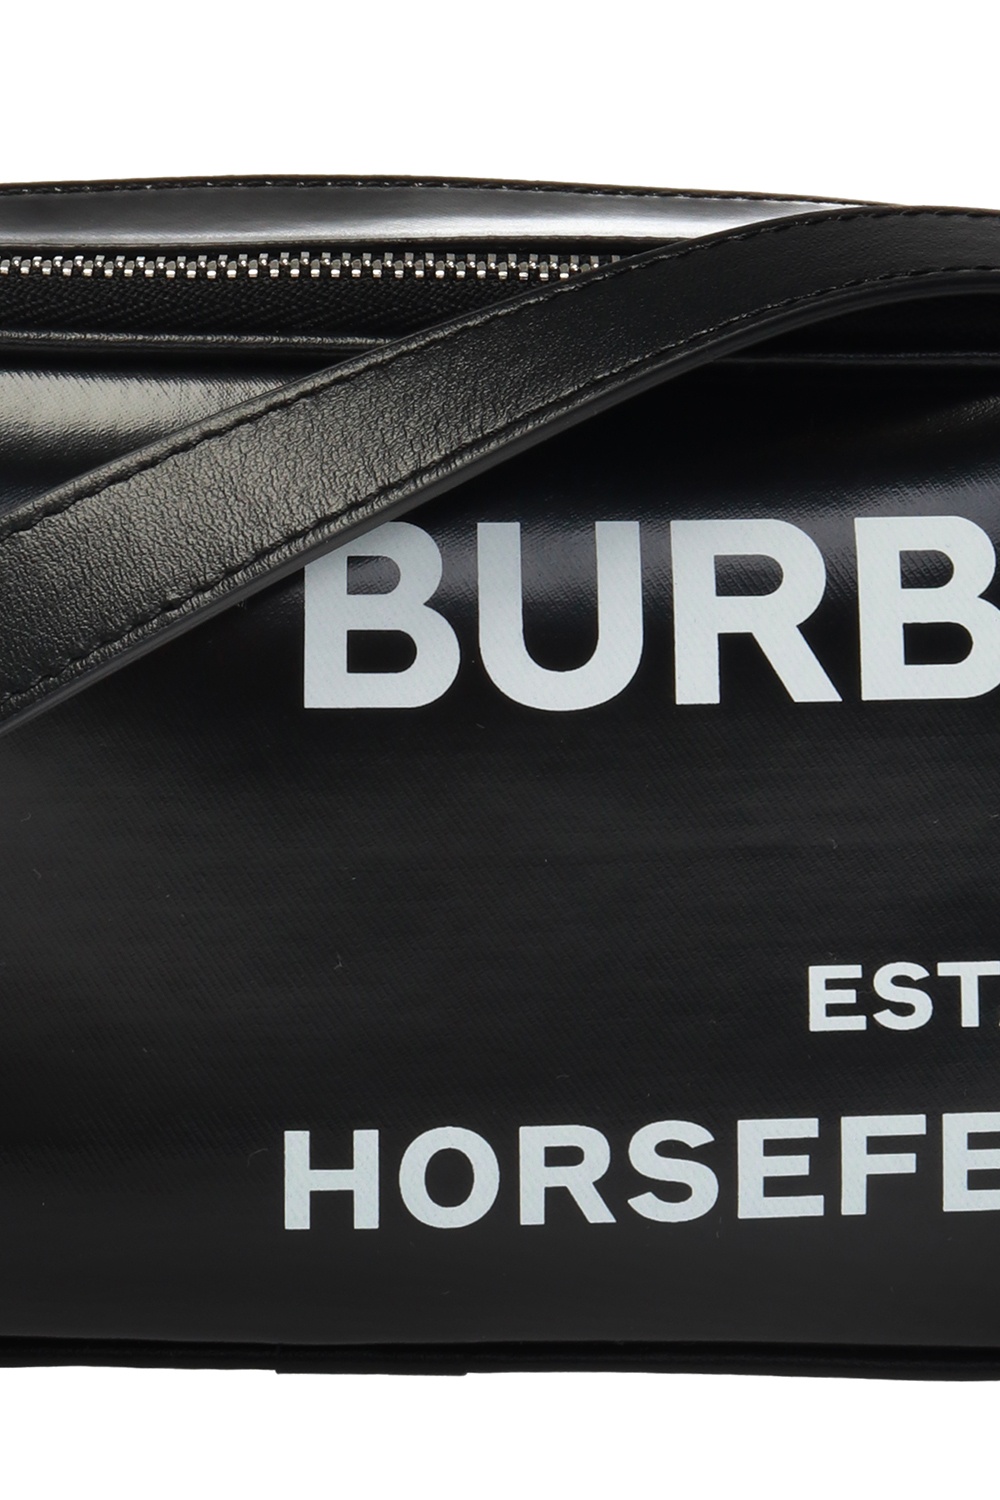 bag logo Burberry - IetpShops GB